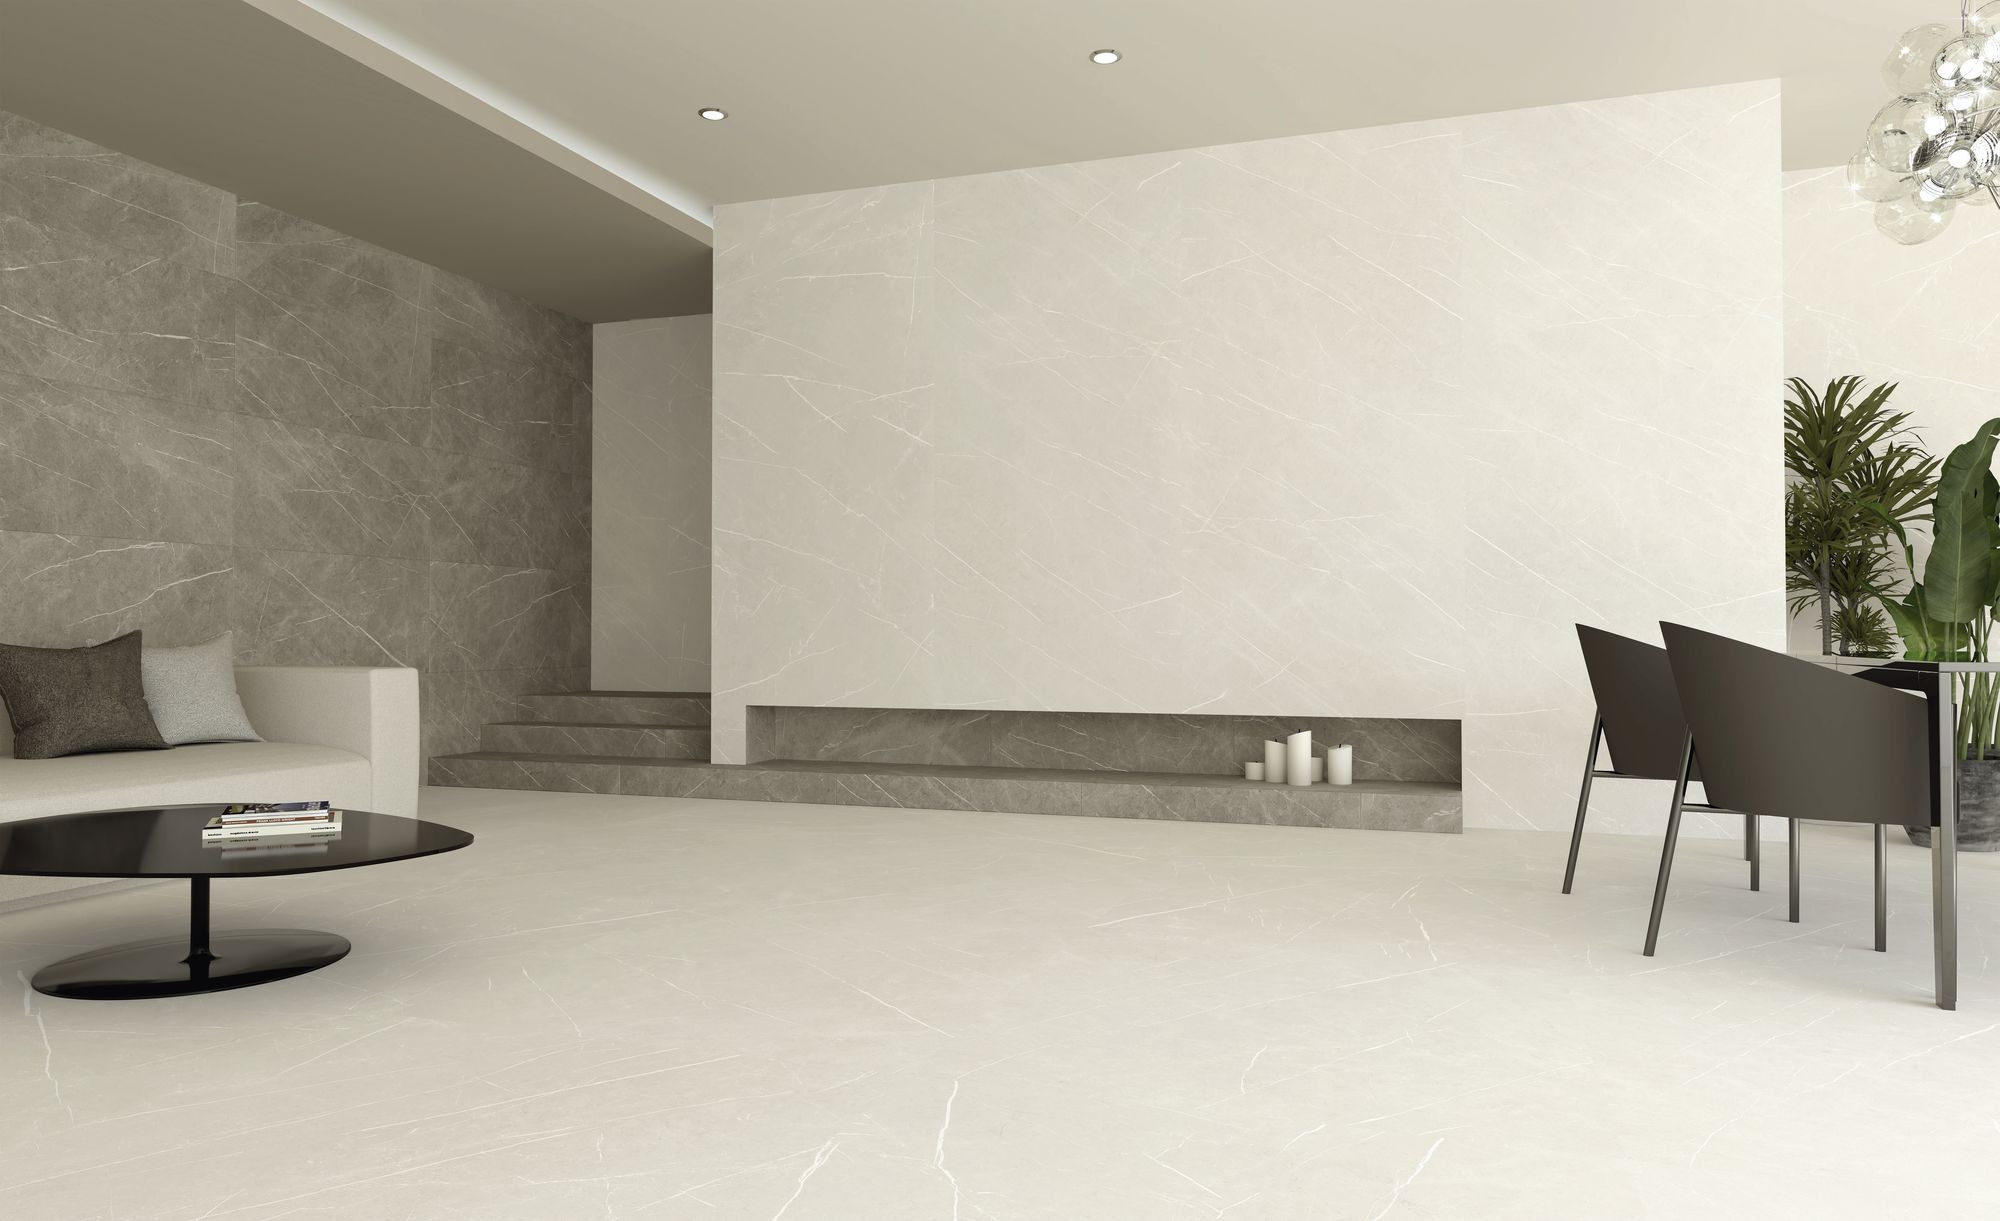 Lot de 4.32 m² - Carrelage imitation marbre ETERNEL CREAM 120X120 - 4.32 m² - 1